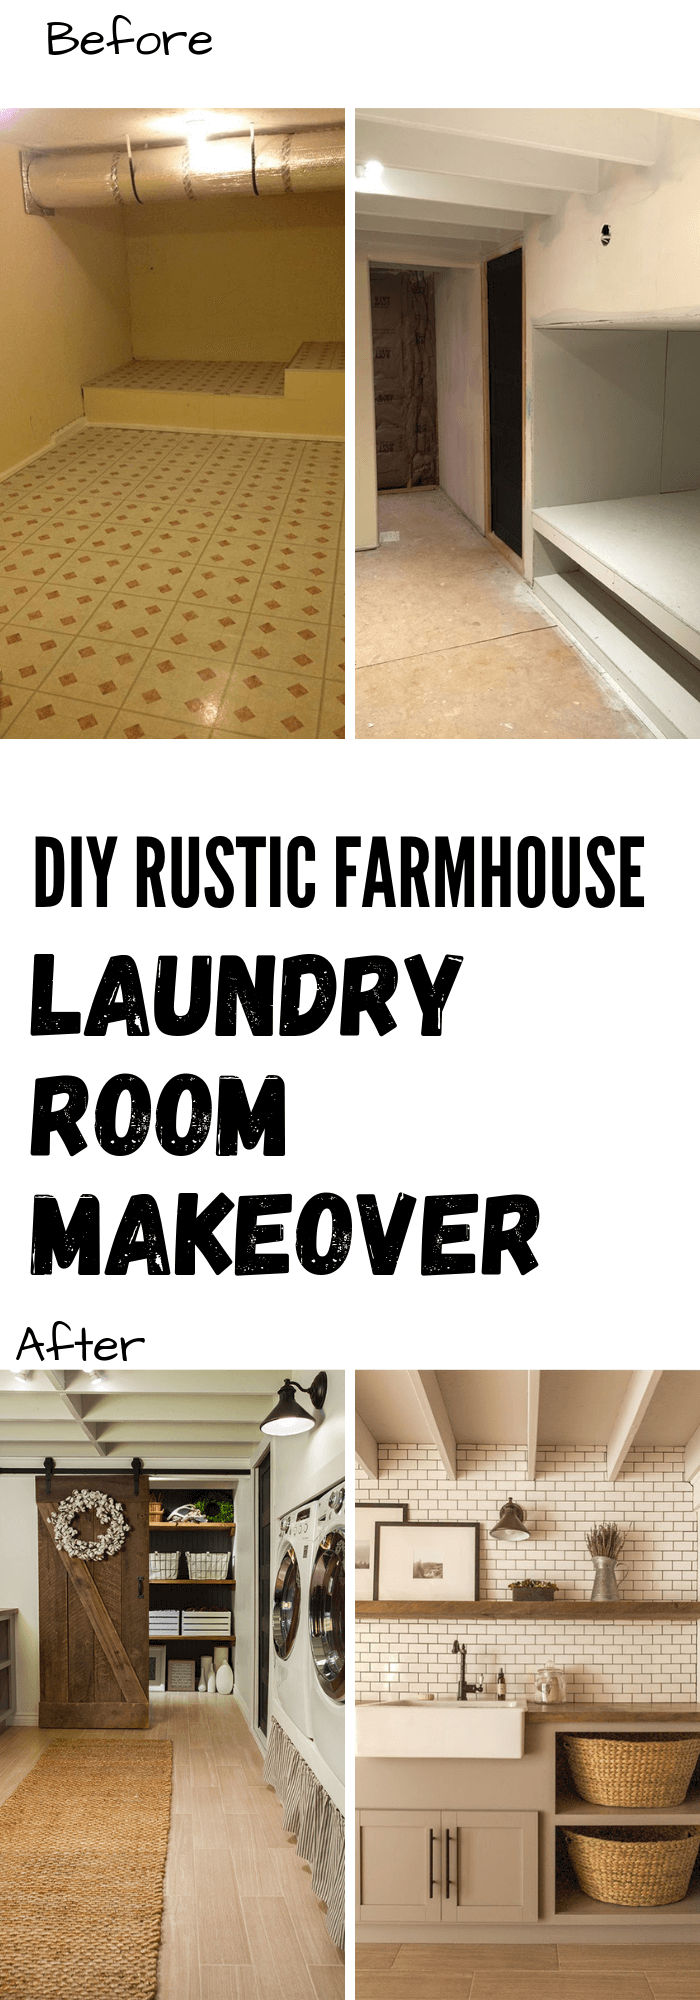 DIY Rustic Farmhouse Laundry Room Makeover